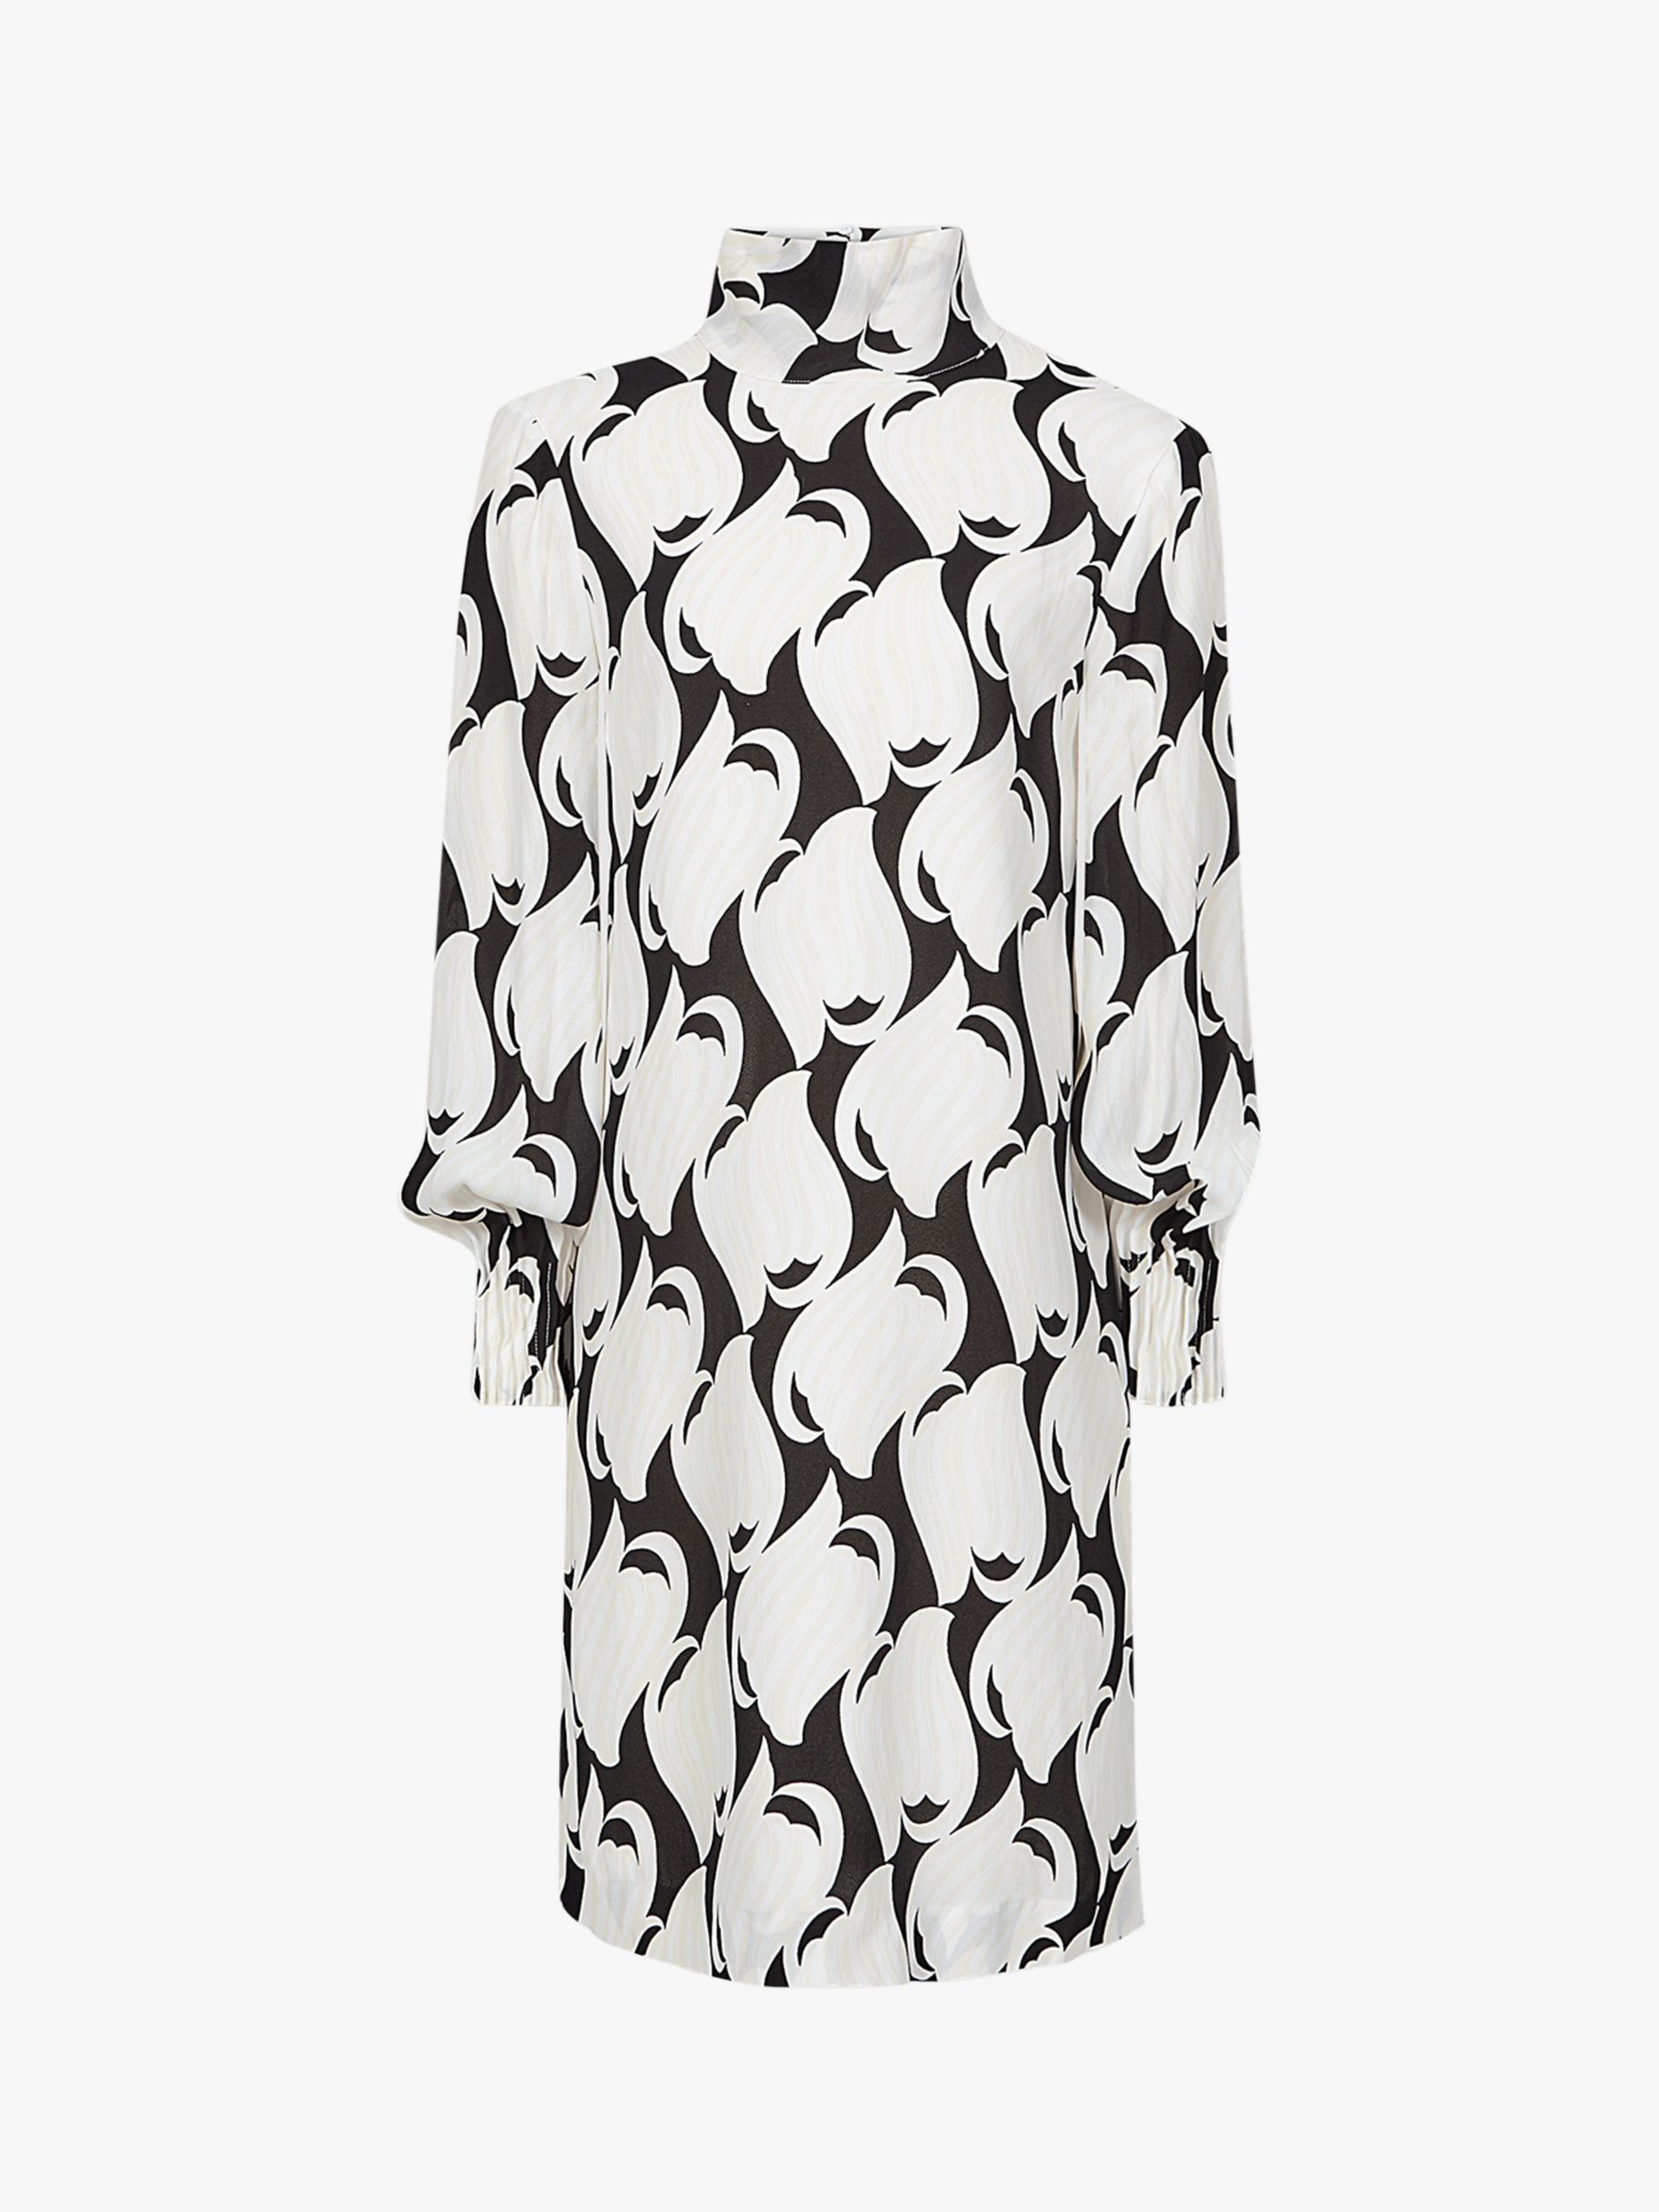 Reiss Azzura Swirl Printed Shift Dress, Black/White